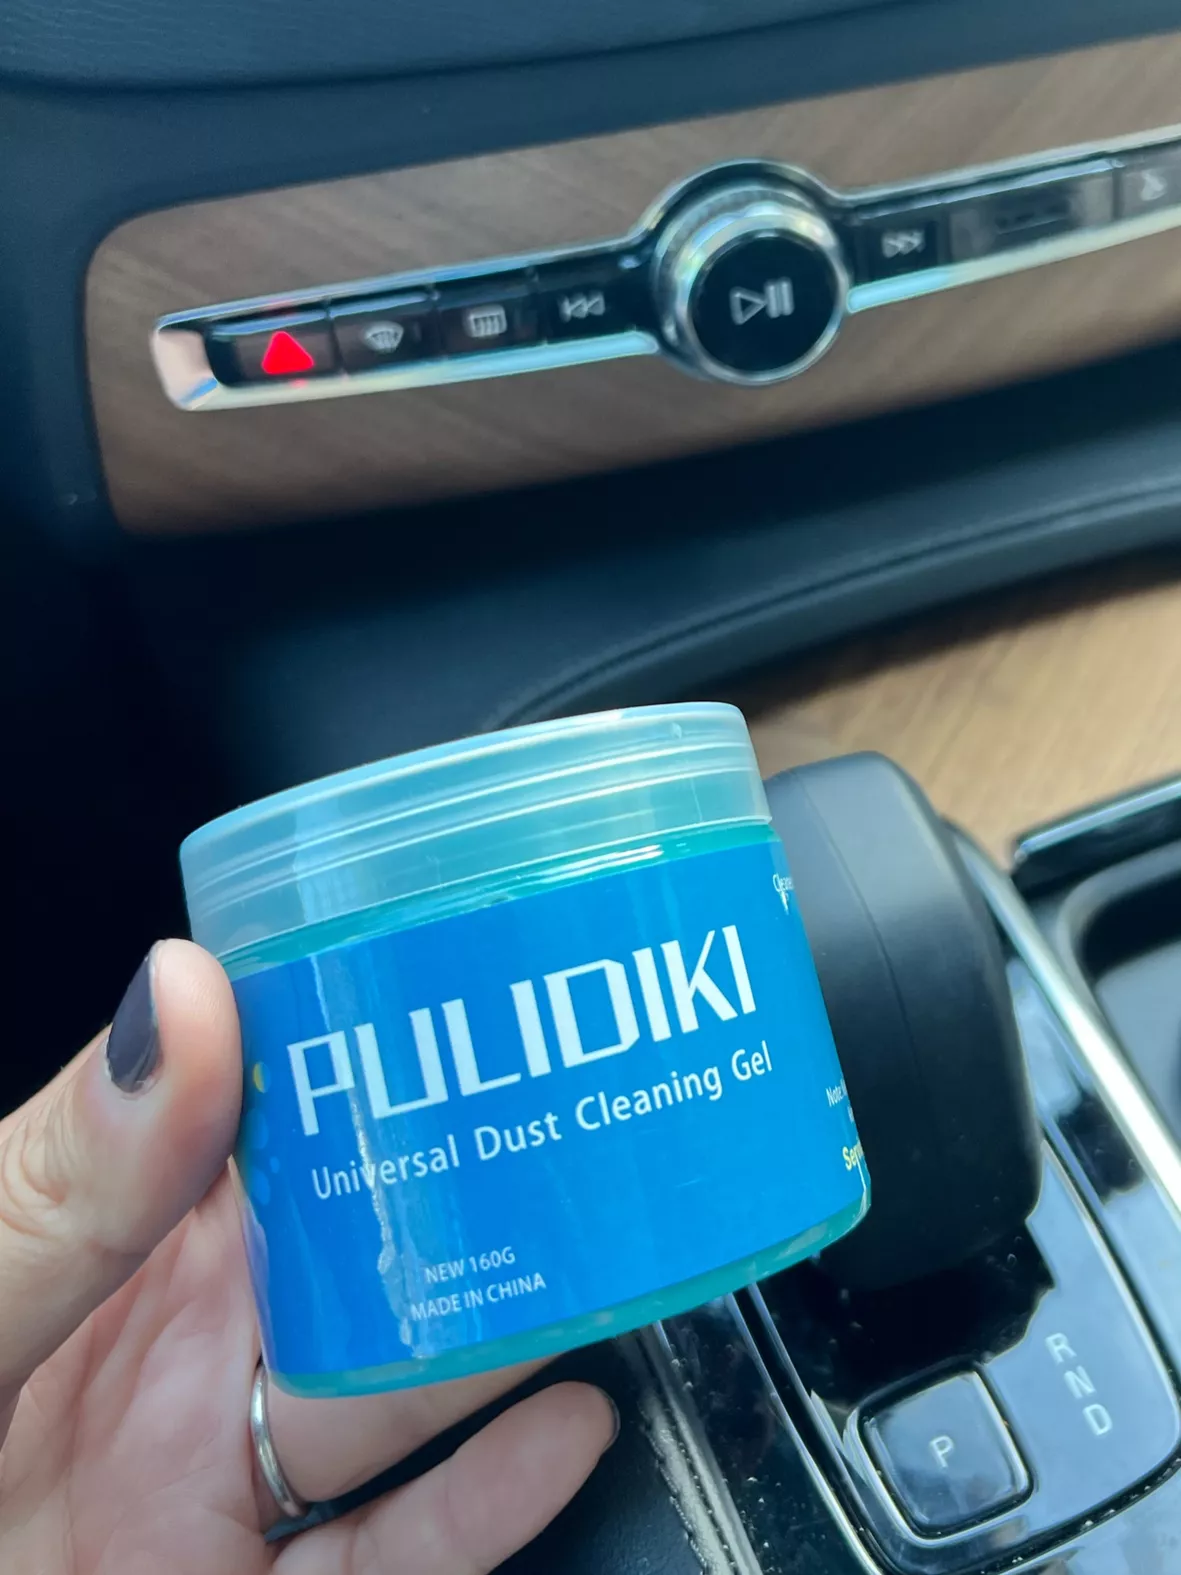 Pulidiki - Car Cleaning Gel, Universal Detailing Cleaning Kit, Automot